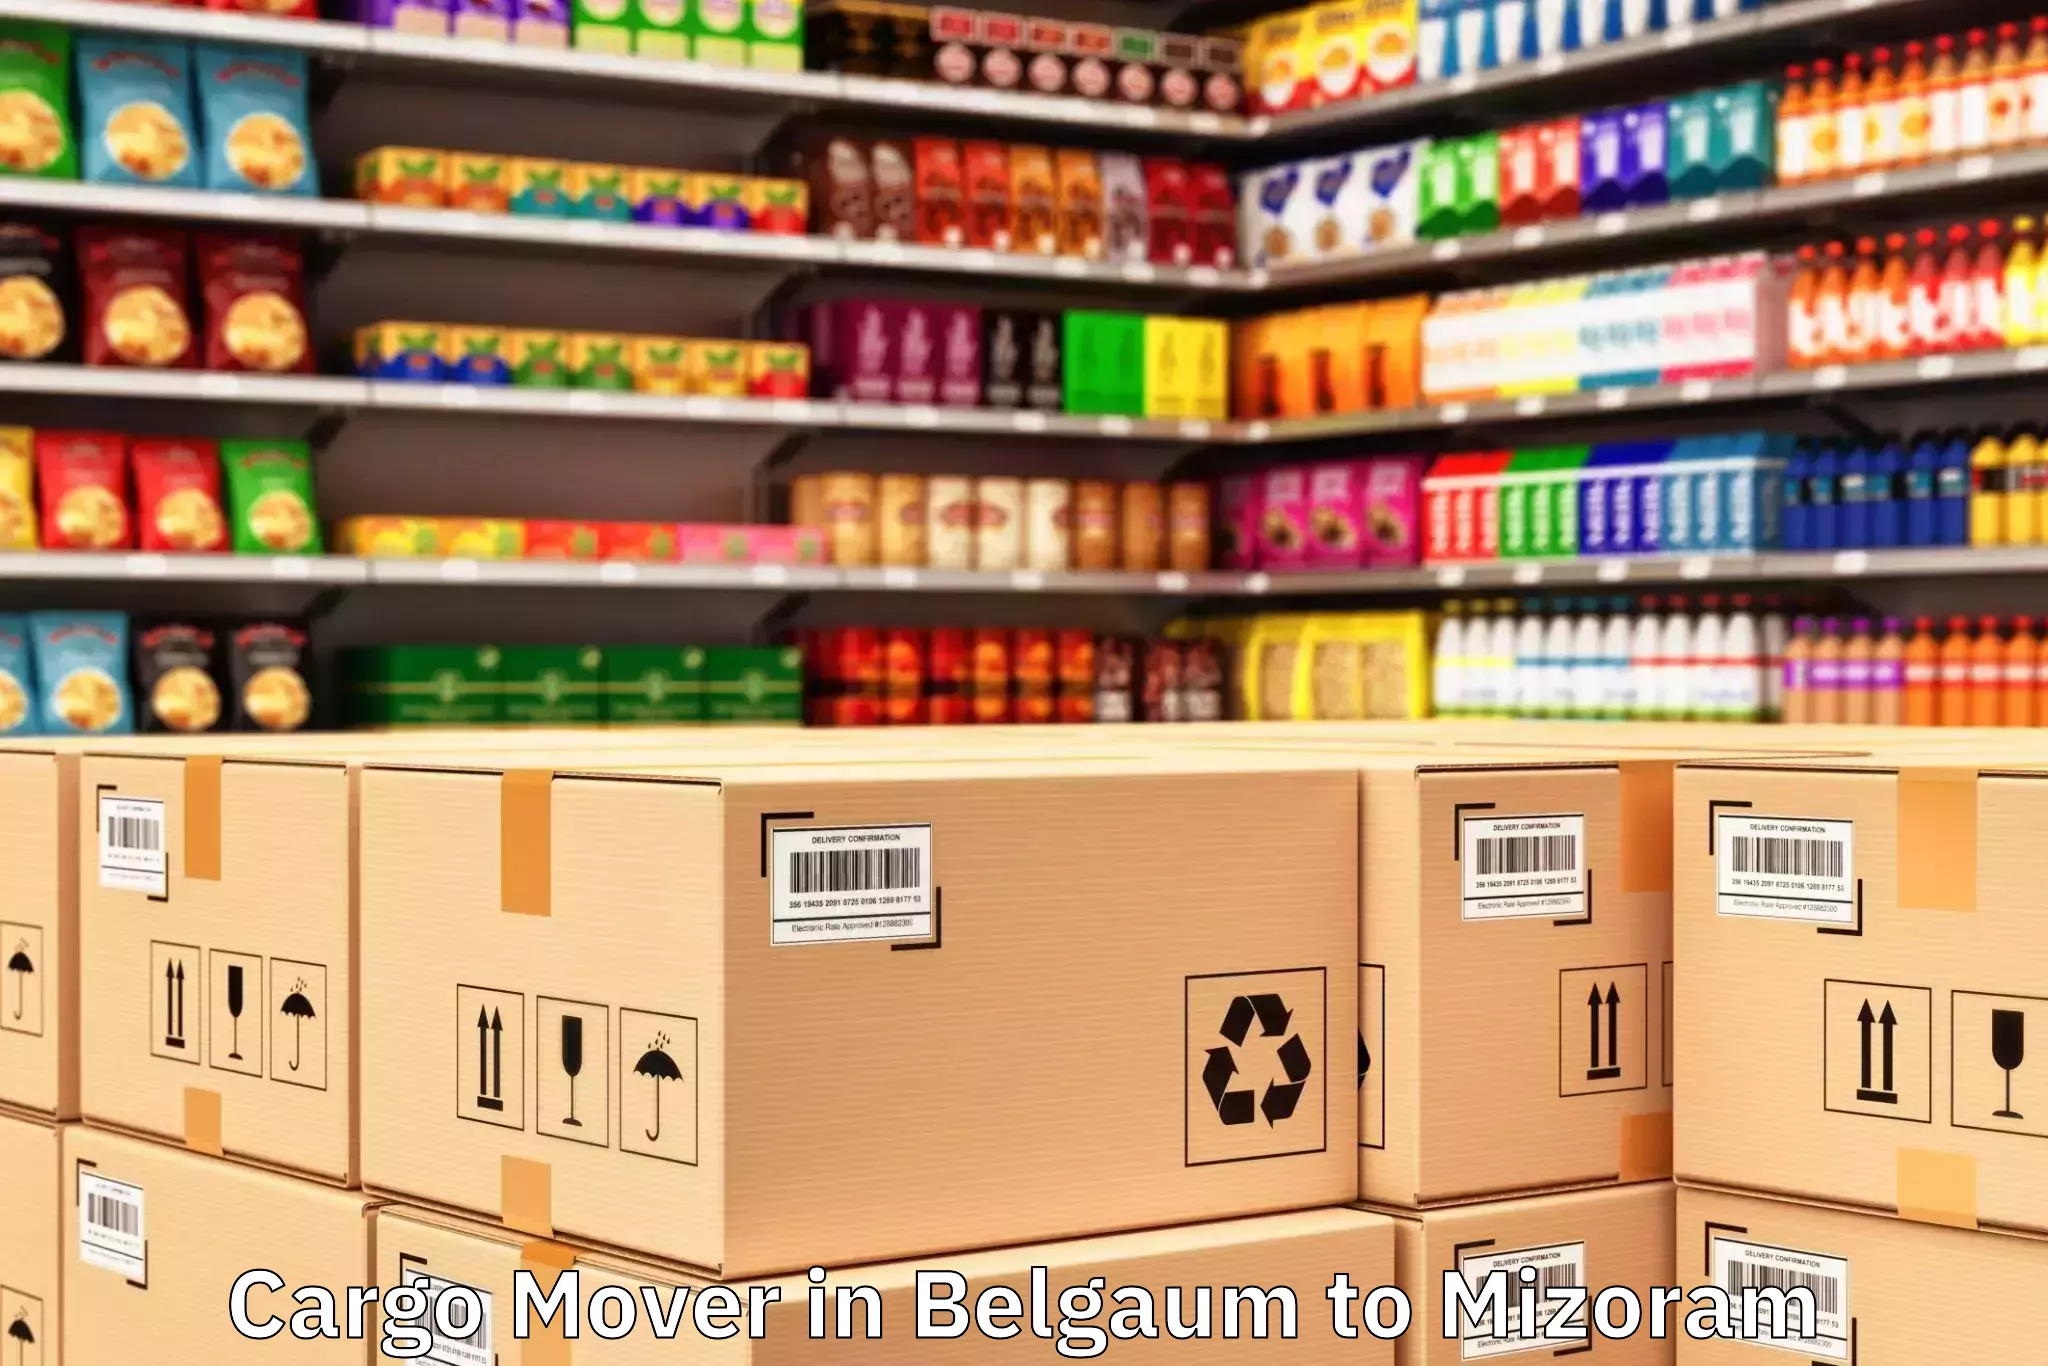 Belgaum to Mizoram Cargo Mover Booking